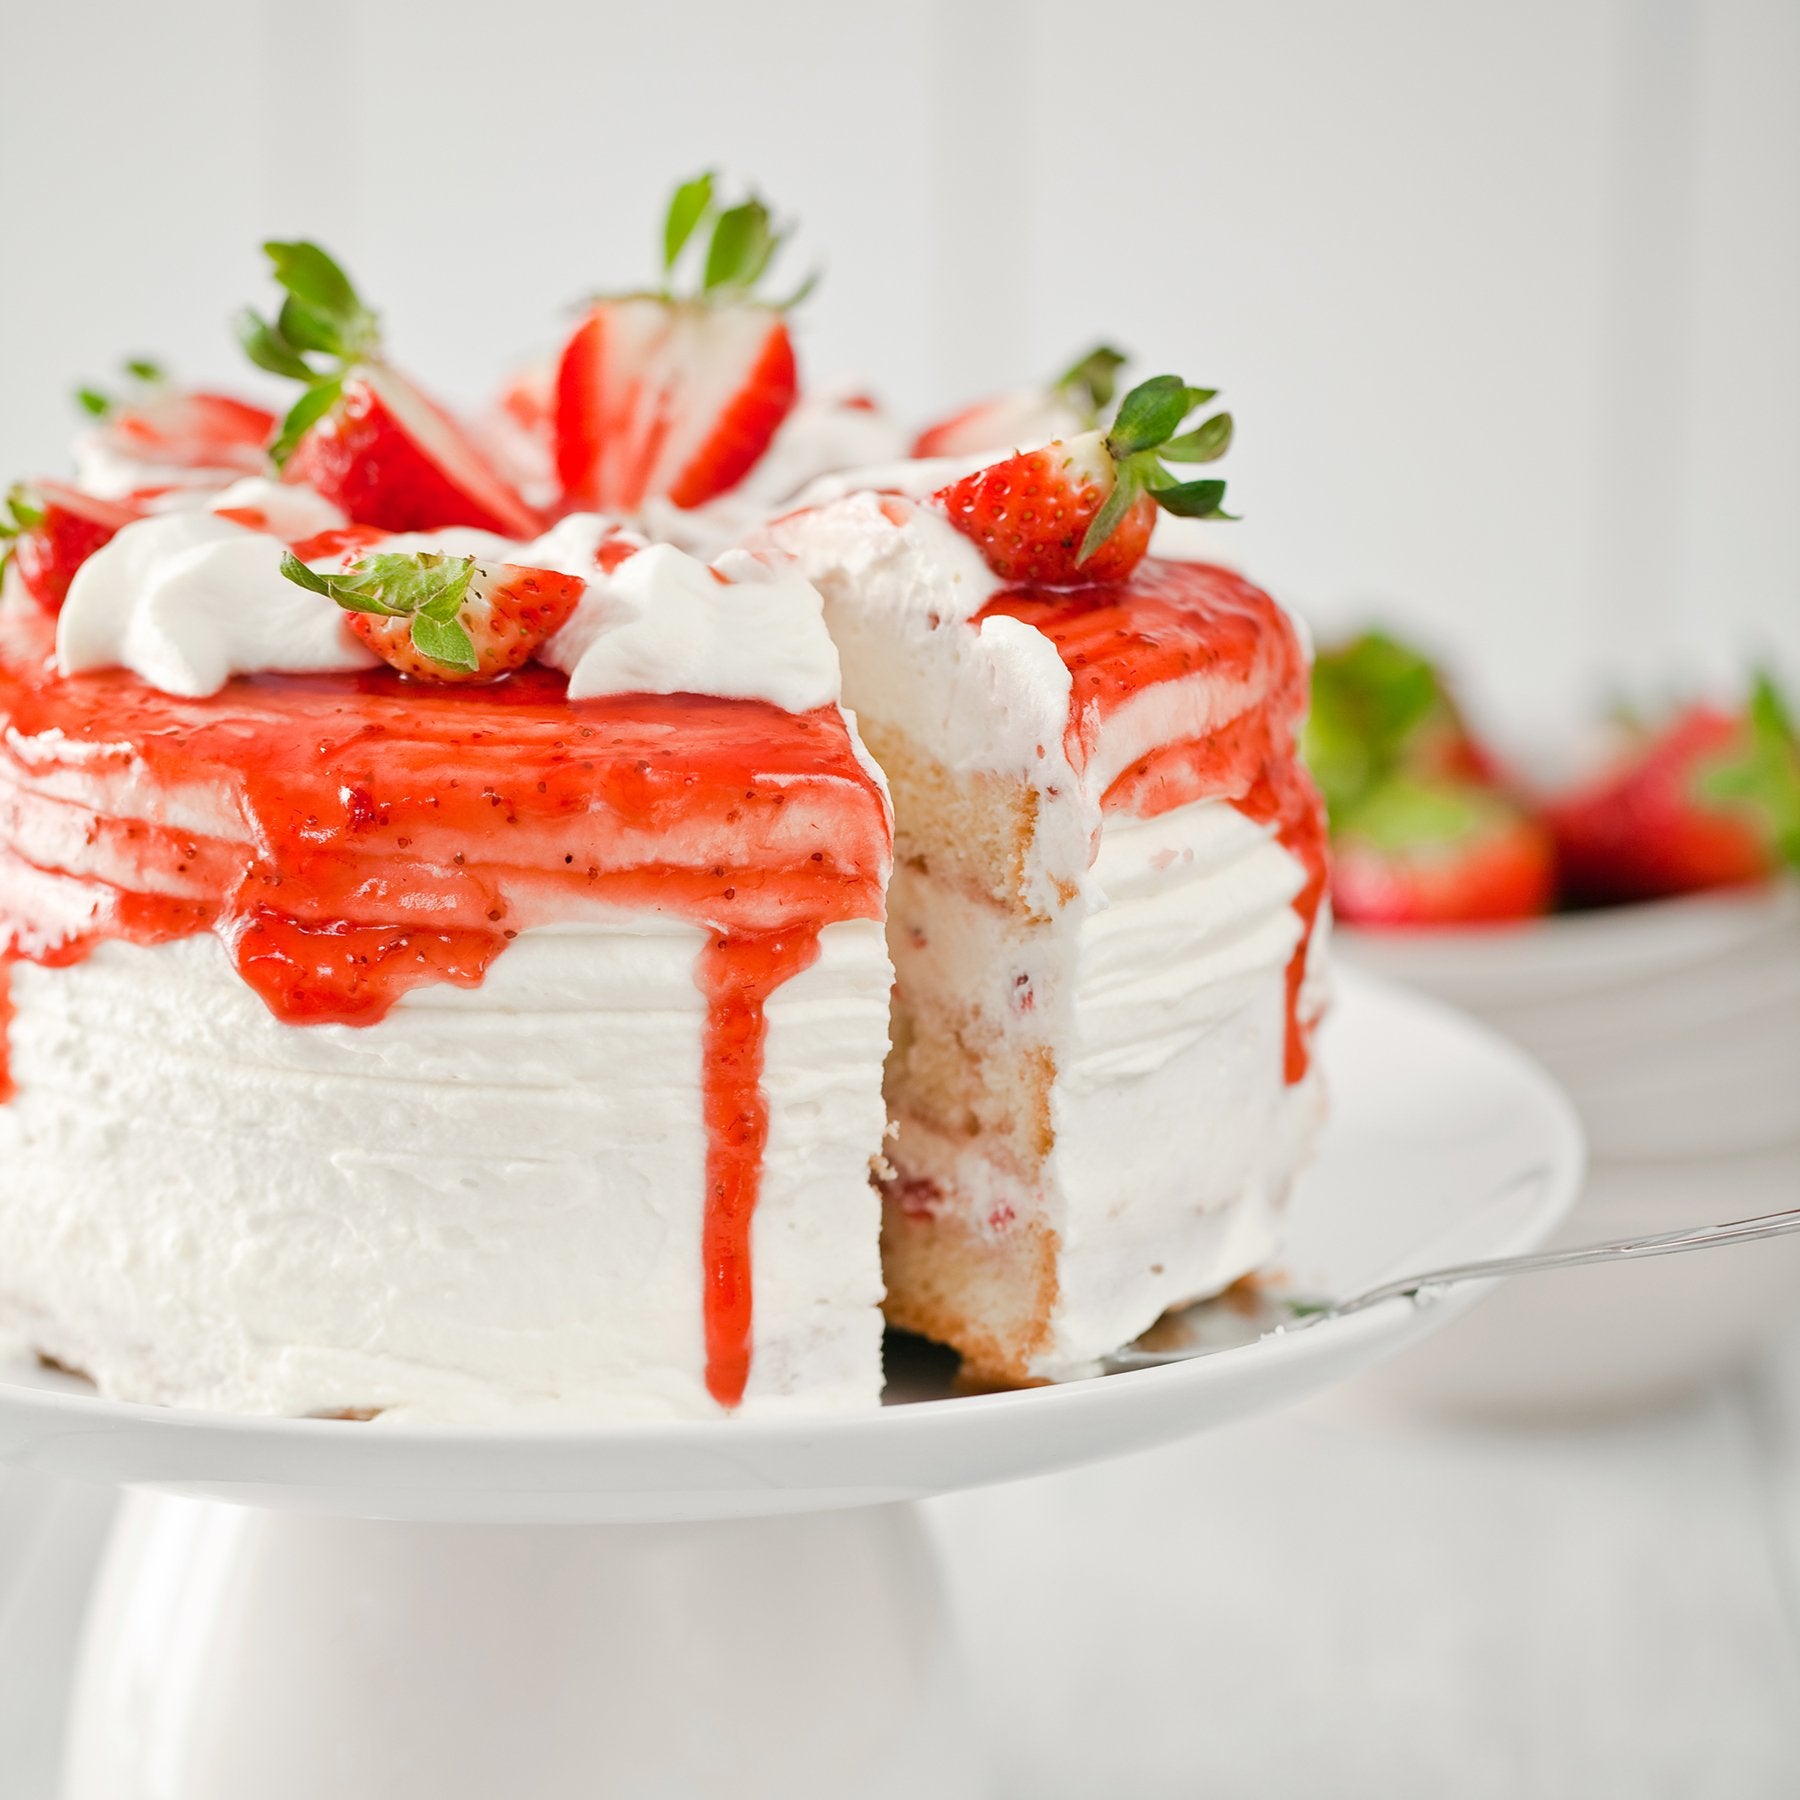 Strawberry Jam Cake Recipe